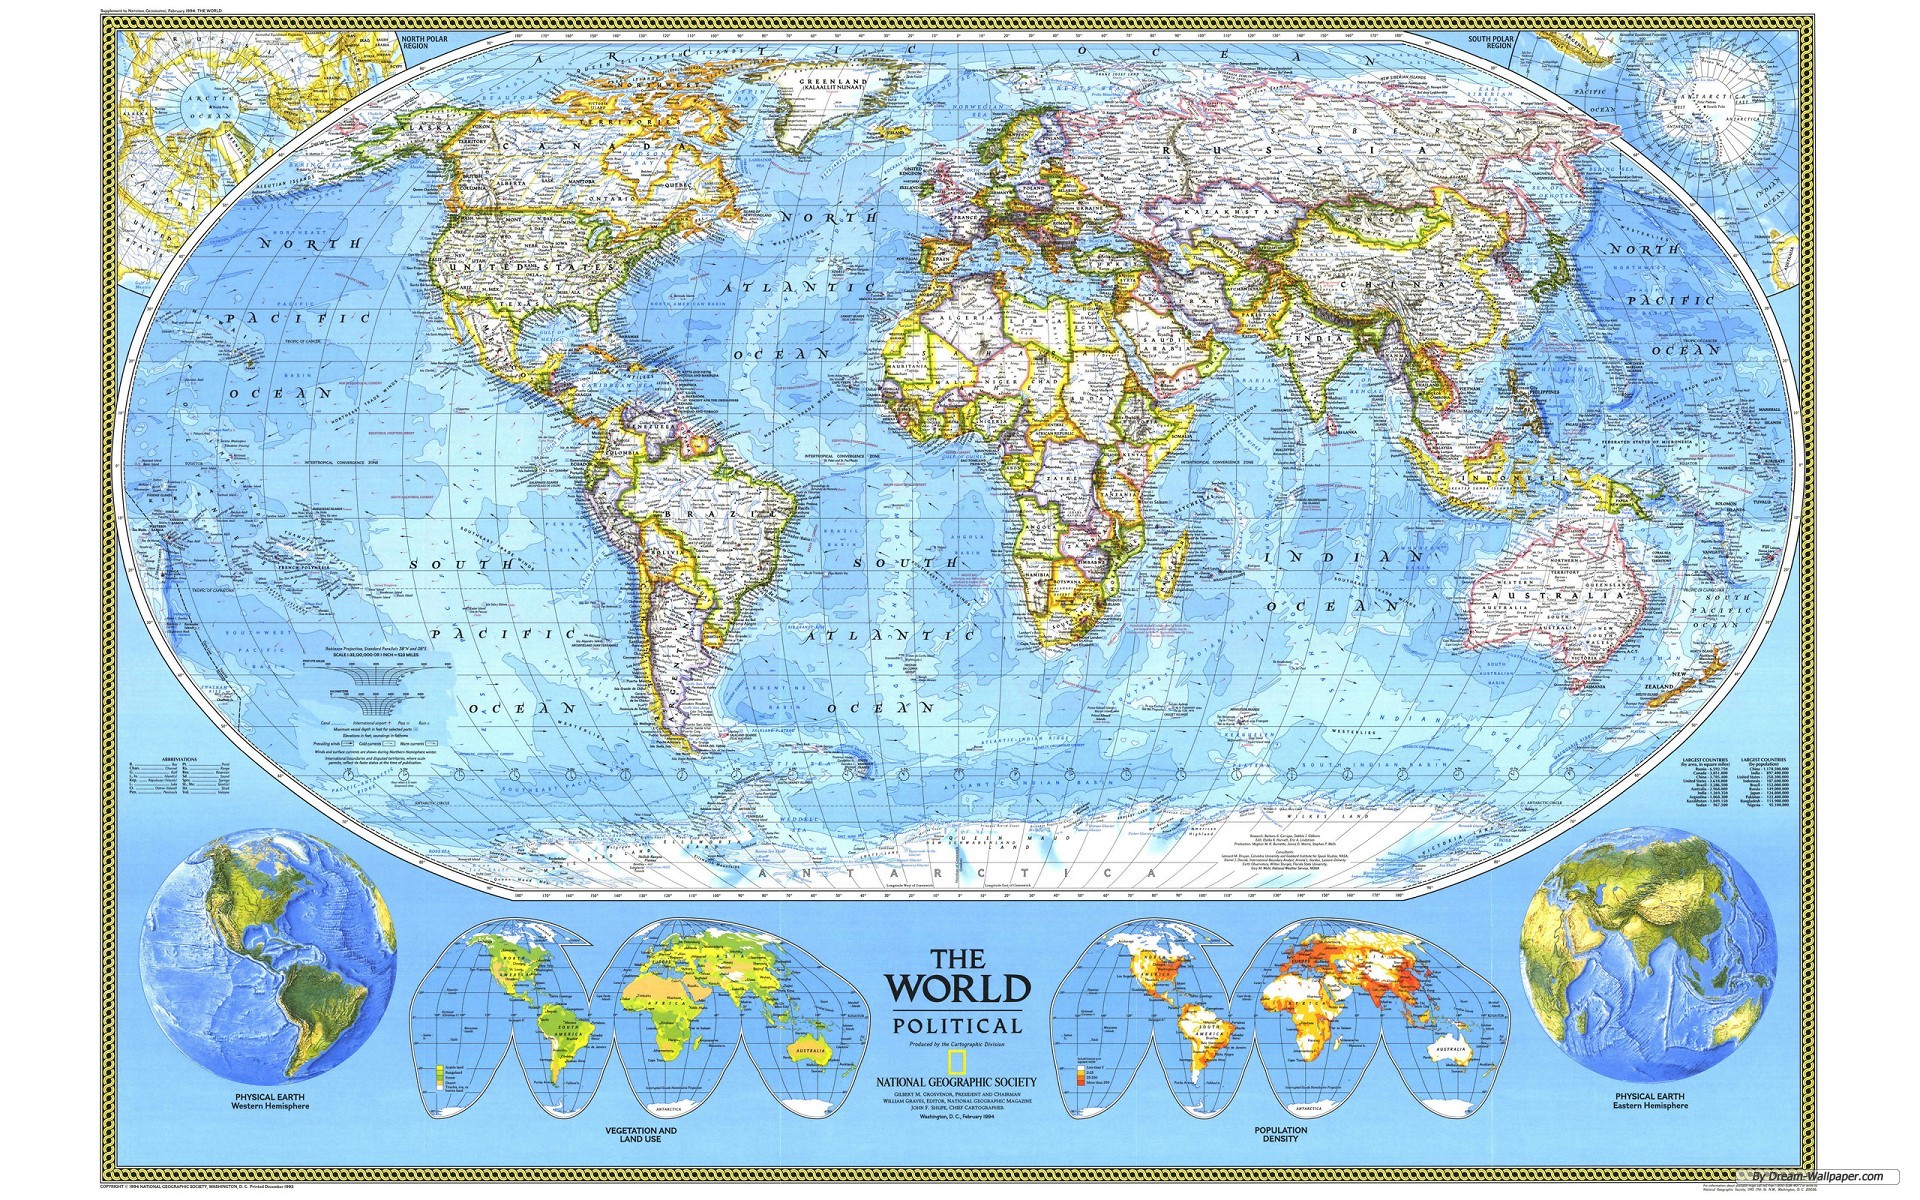 Gallery For gt Political World Map Desktop Wallpaper